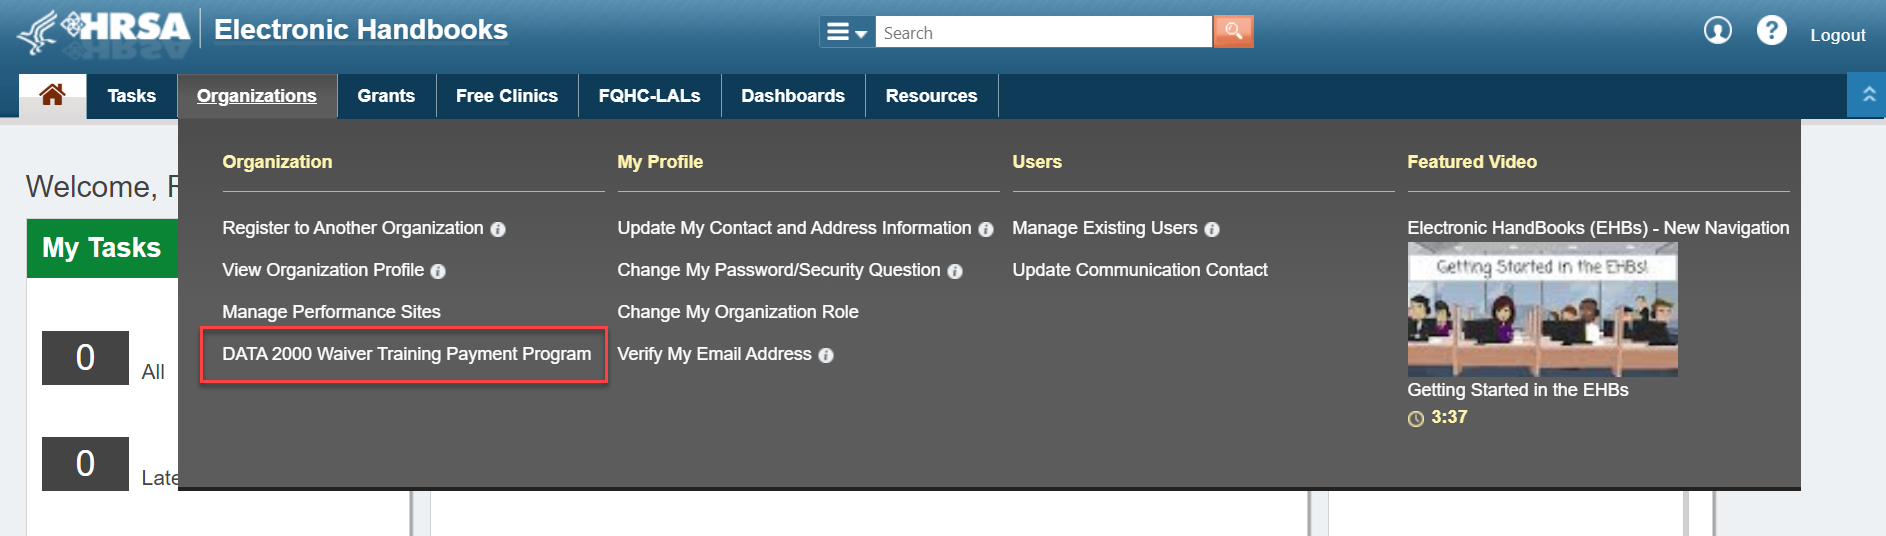 Screenshot of Organizations tab drop down list showing DATA 2000 Waiver Training Payment Program option